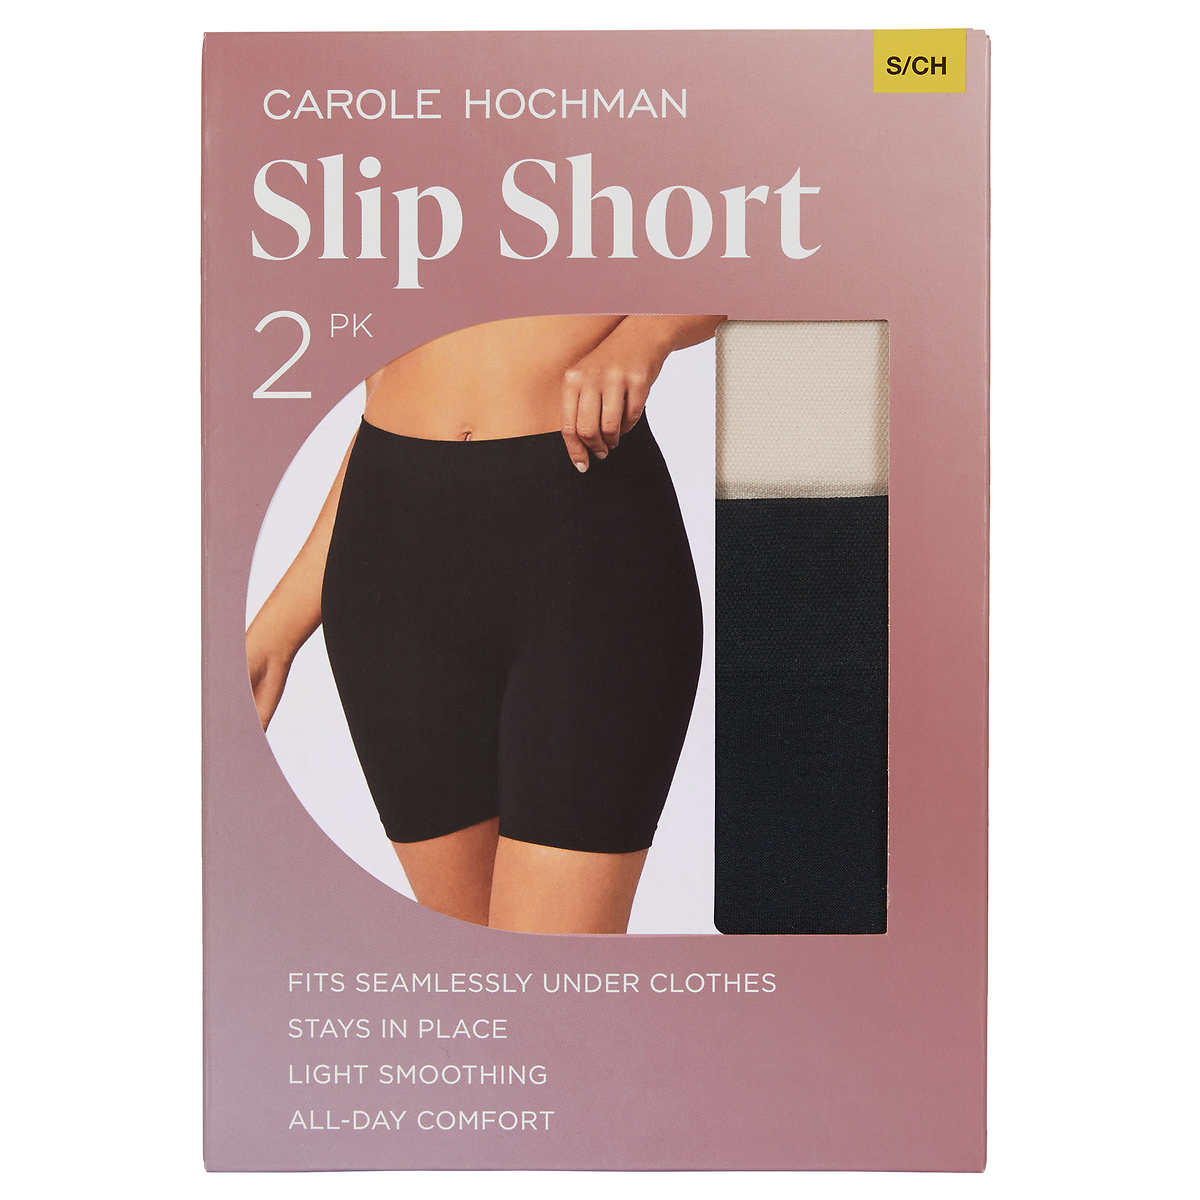 Carole Hochman 2 Pack Seamless Comfort Bra Black & Nude or White & Gray